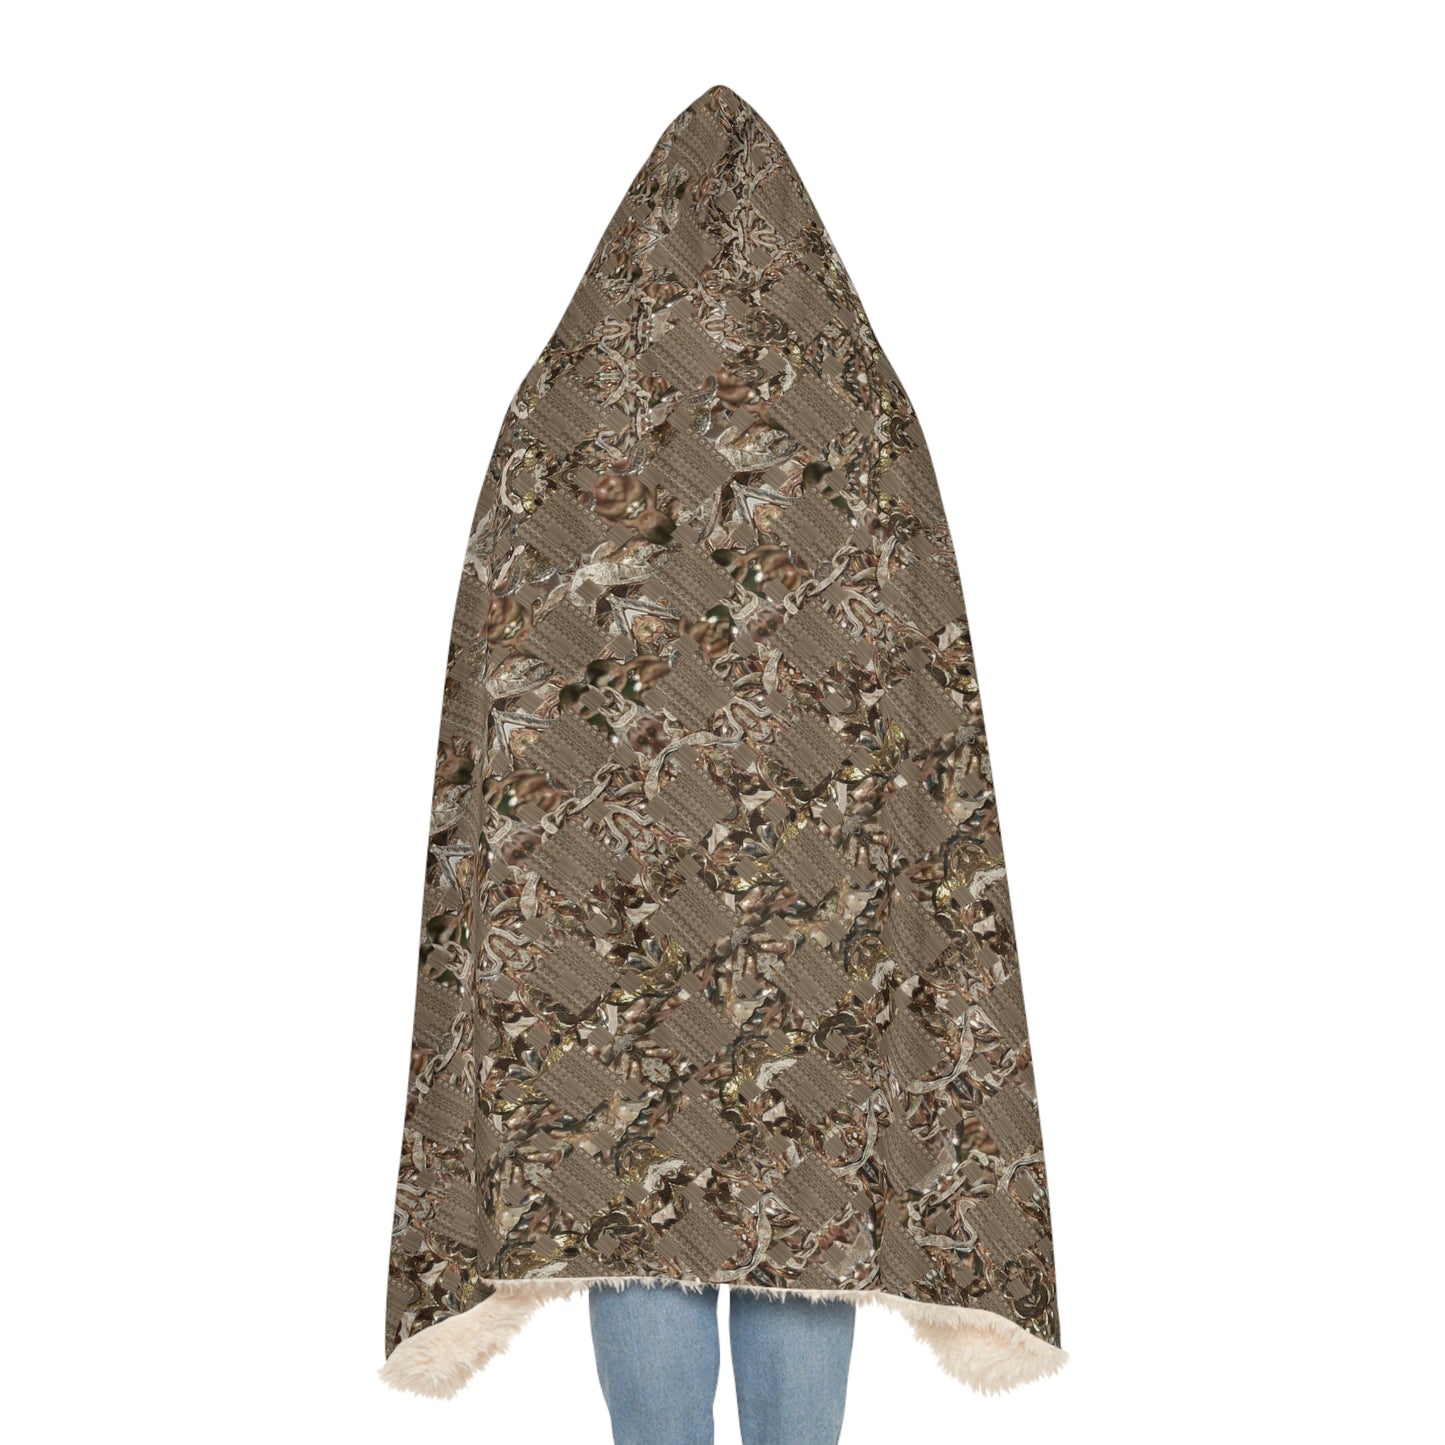 Hooded Snuggle Blanket (Samhain Dream Thaw 9/15 (Novem ex quindecim) RJSTHw2023 RJS